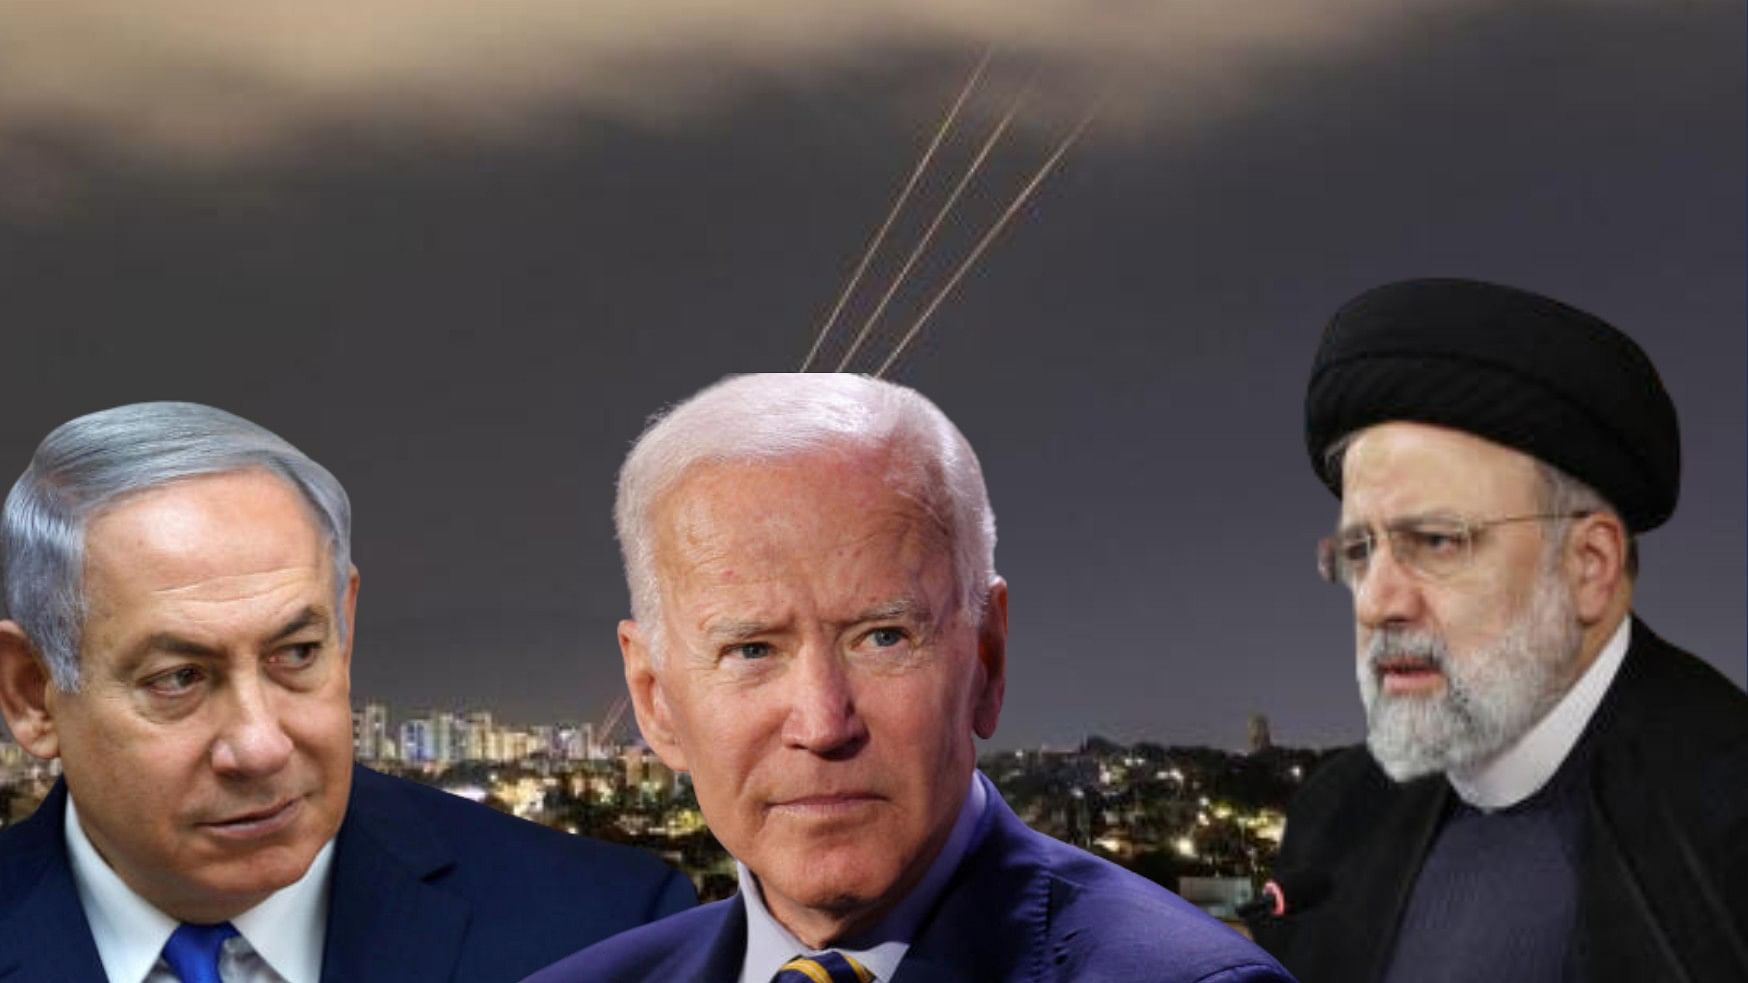 <div class="paragraphs"><p>Israel PM Benjamin Netanyahu, US President Joe Biden and Iran President Ebrahim Raisi against the backdrop of Iranian drones over Israel.</p></div>